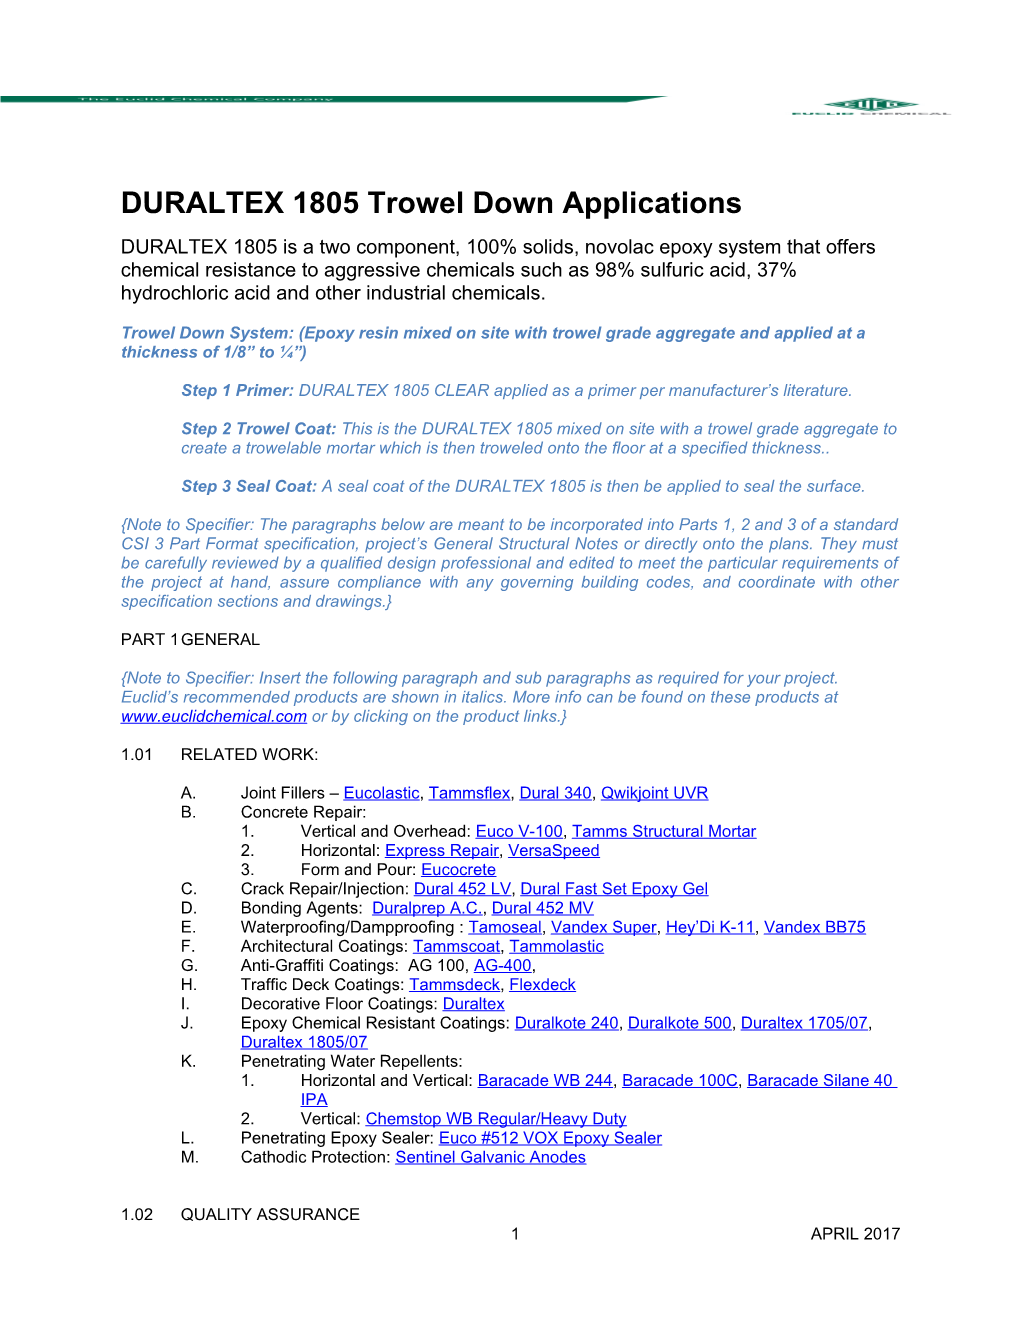 DURALTEX 1805Trowel Down Applications